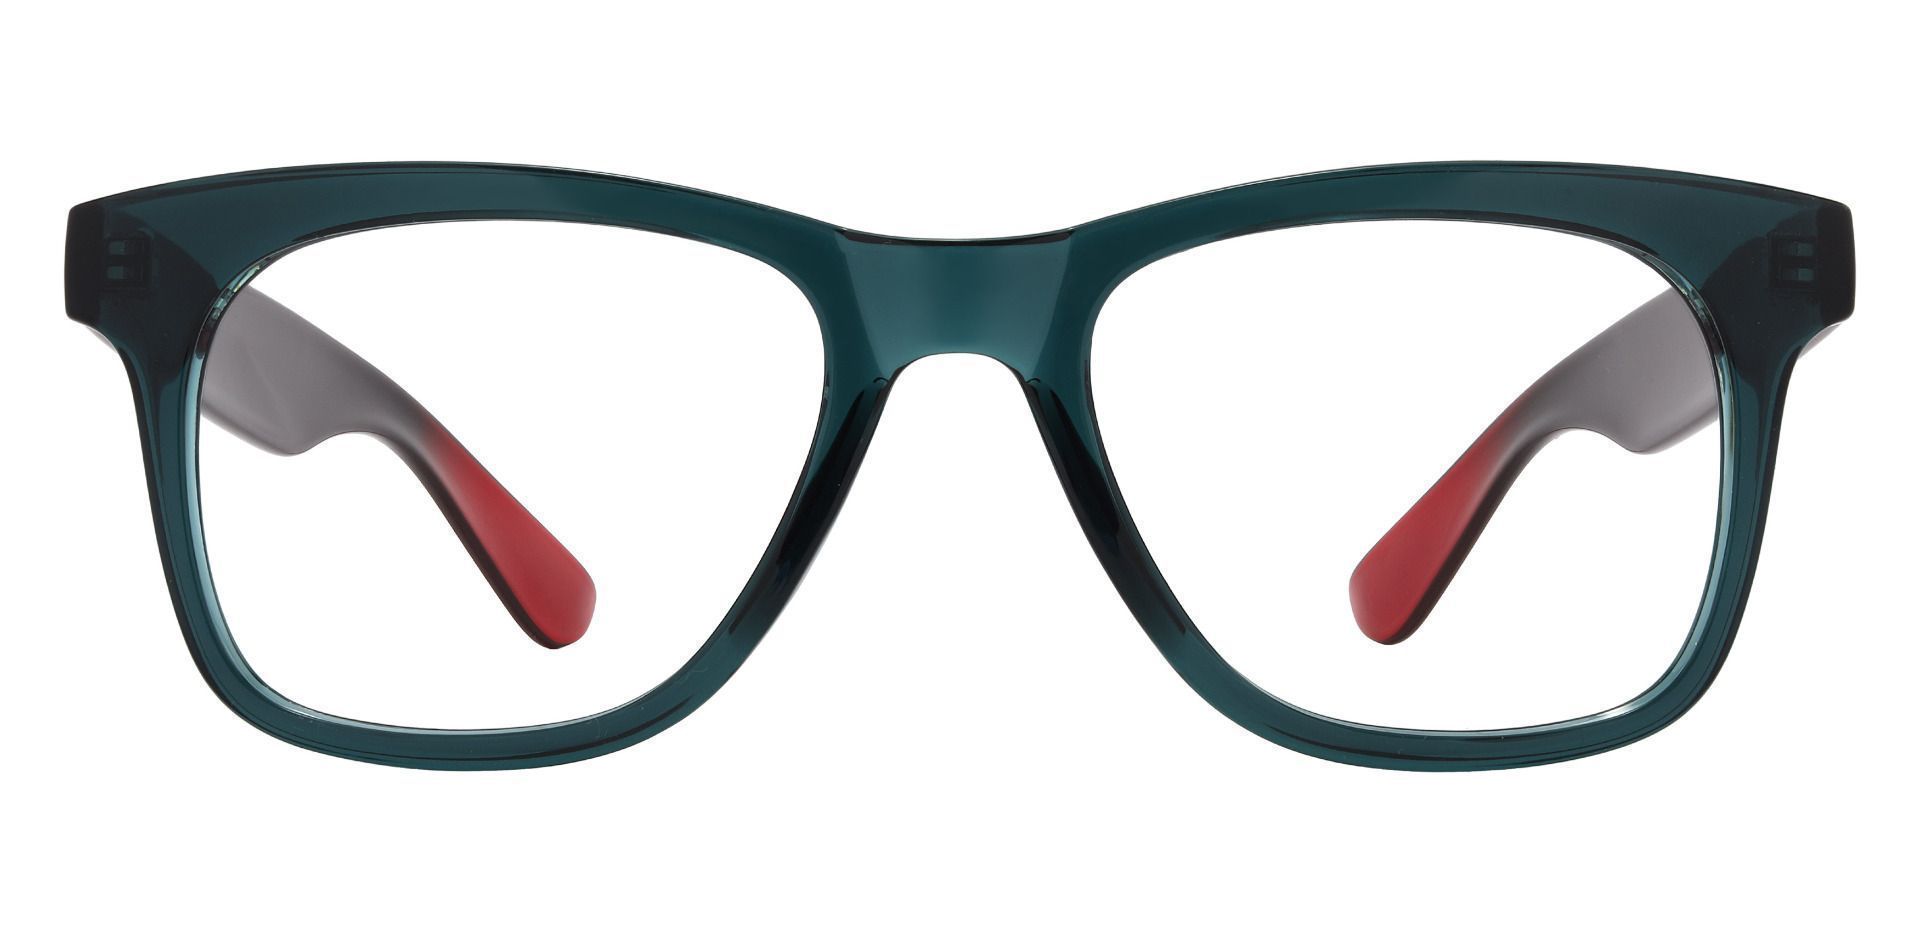 Hurley Men's Square Eyeglasses, HMO119 West Coast, Black/Crystal